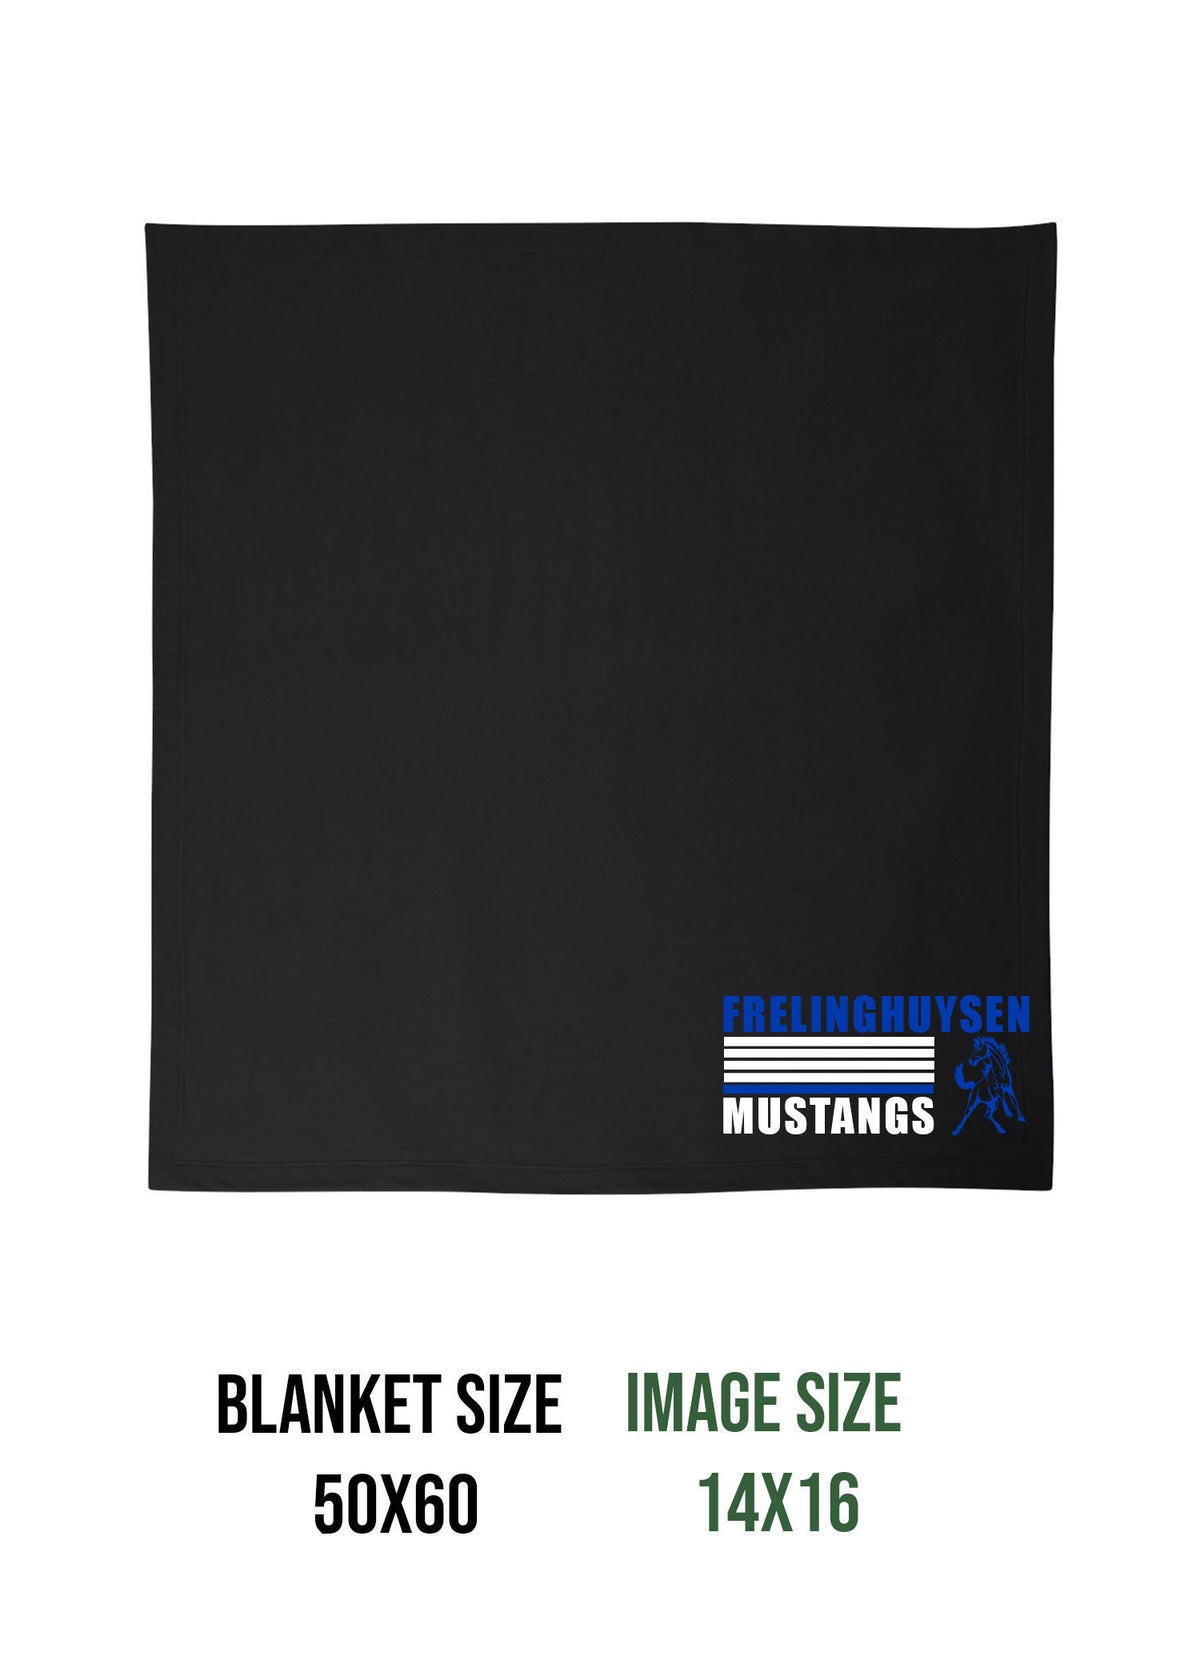 Frelinghuysen Design 8 Blanket